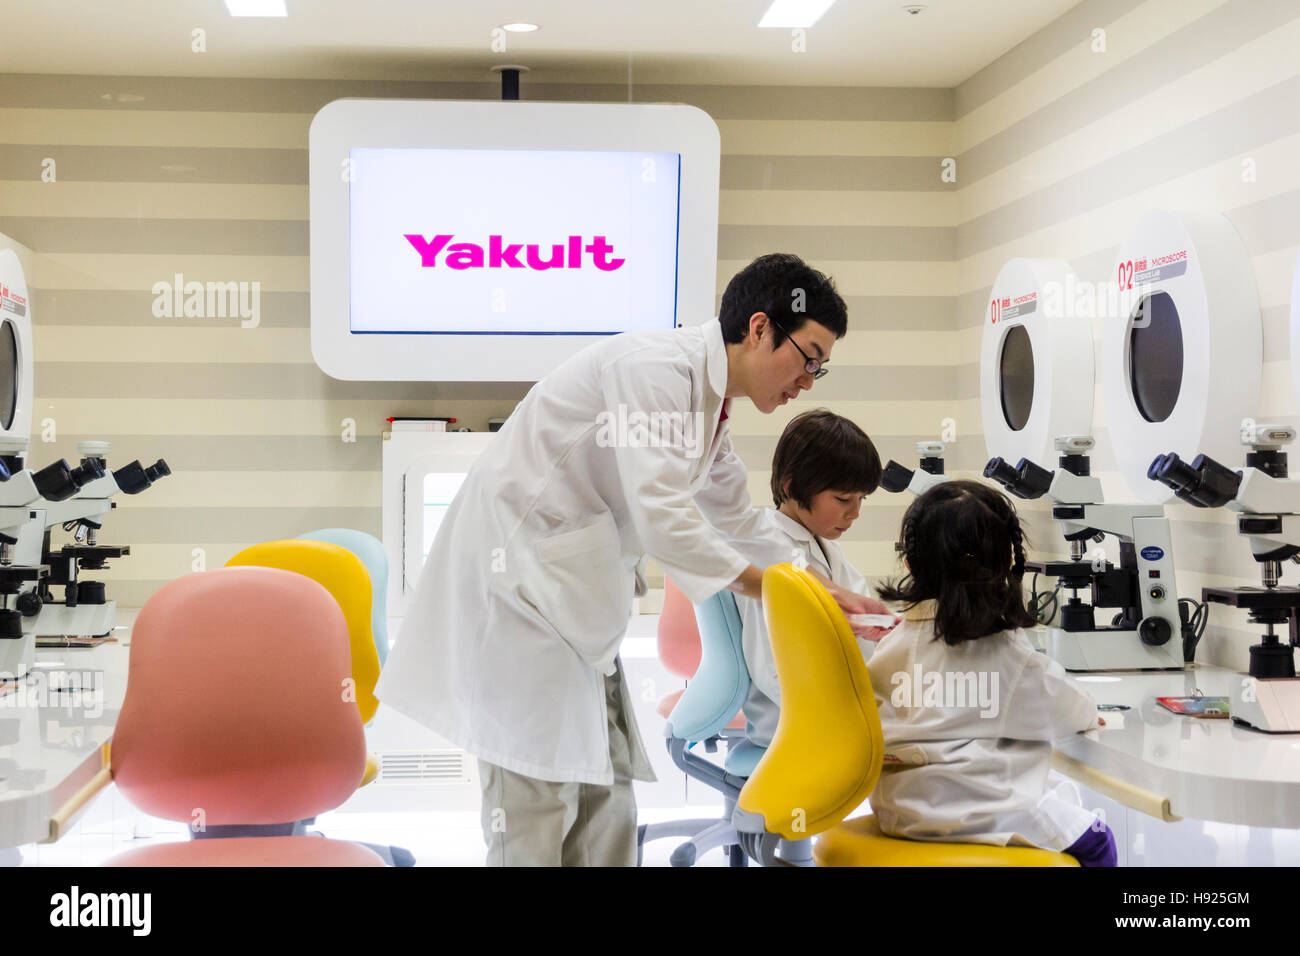 Japan, Nishinomiya, KidZania. 2 Children, boy, girl, in white laboratory coats using microscopes assisted by adult man in Yakult laboratory. Stock Photo